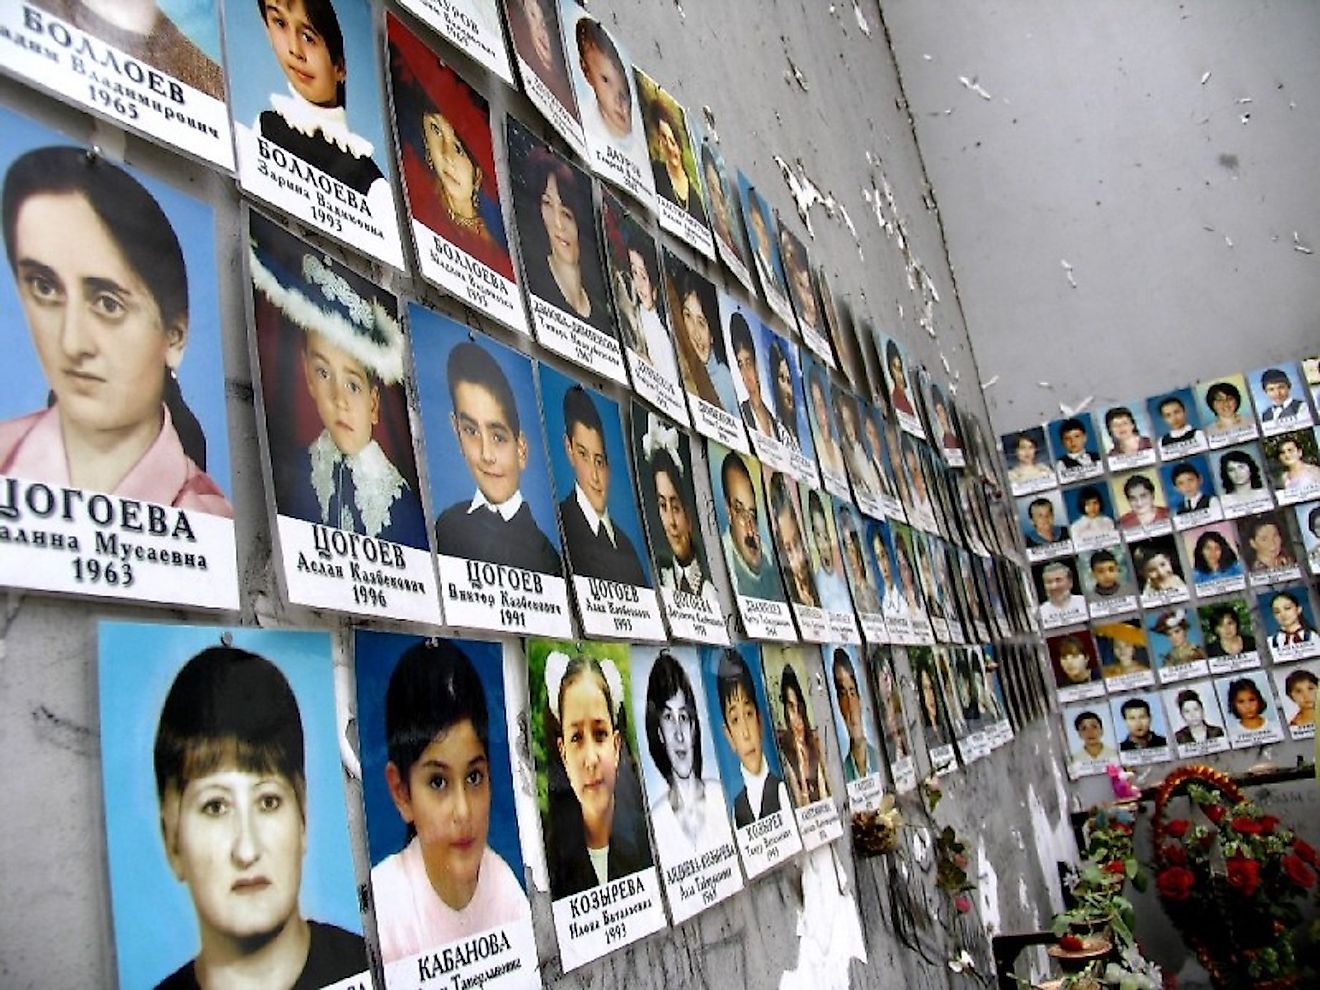 Photos of the victims at Beslan school. Image credit: Aaron bird/Wikimedia.org